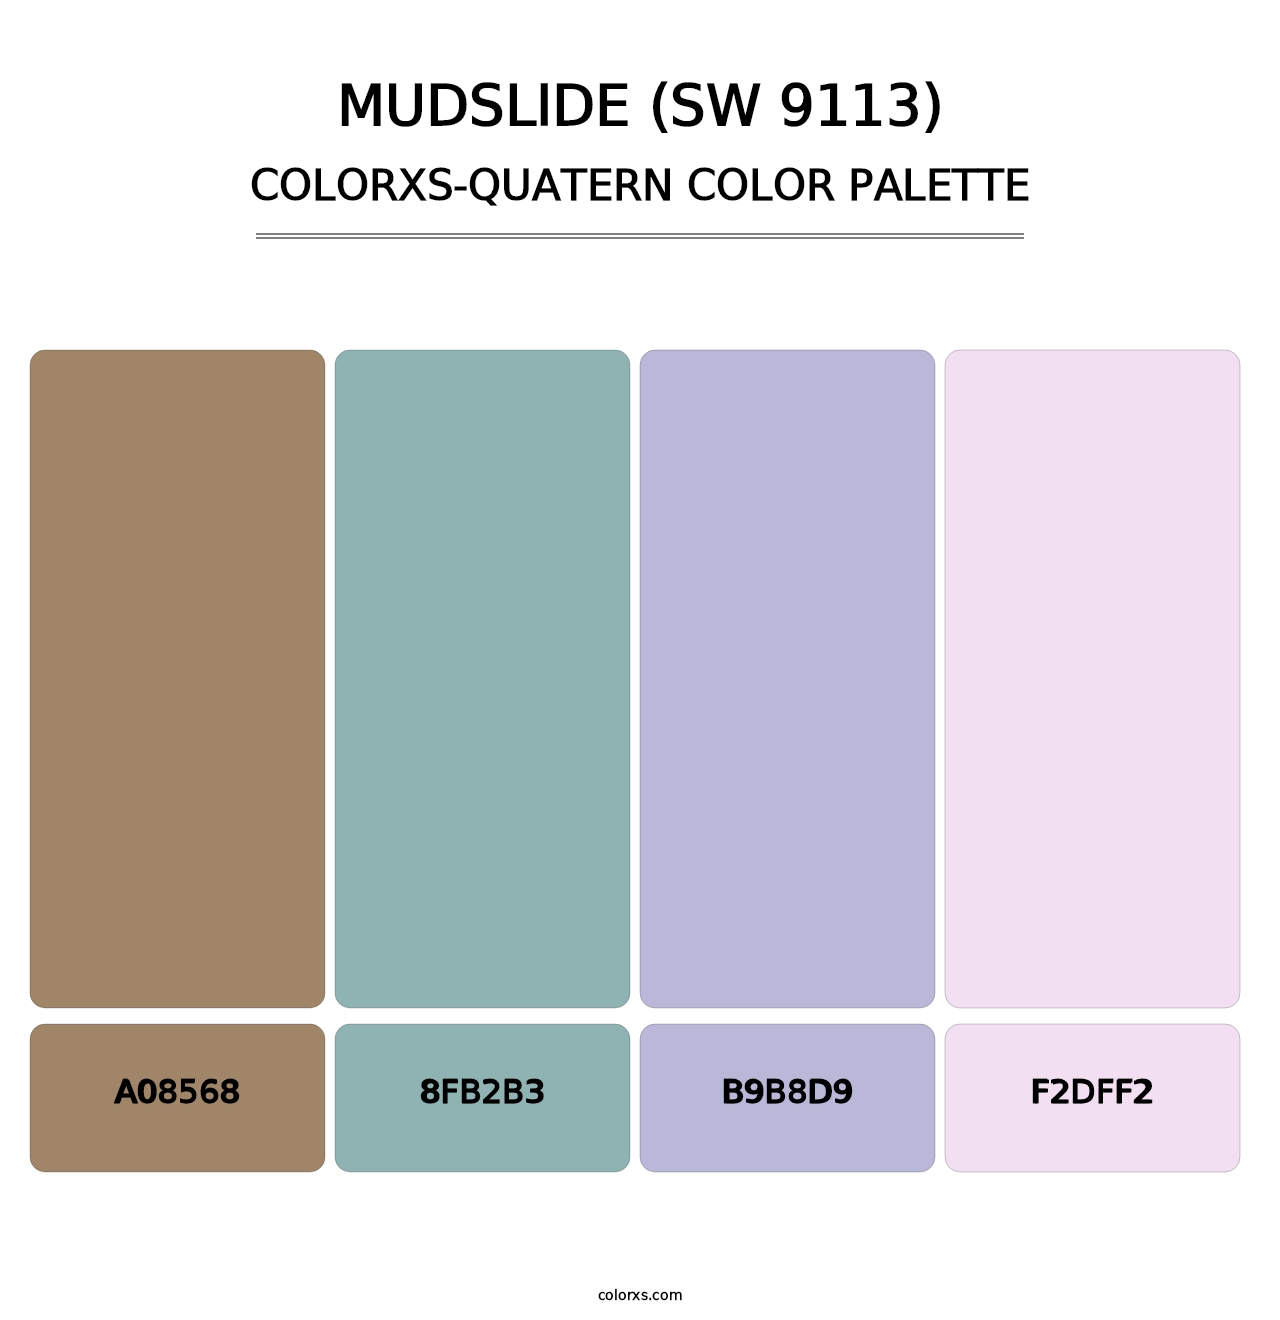 Mudslide (SW 9113) - Colorxs Quatern Palette